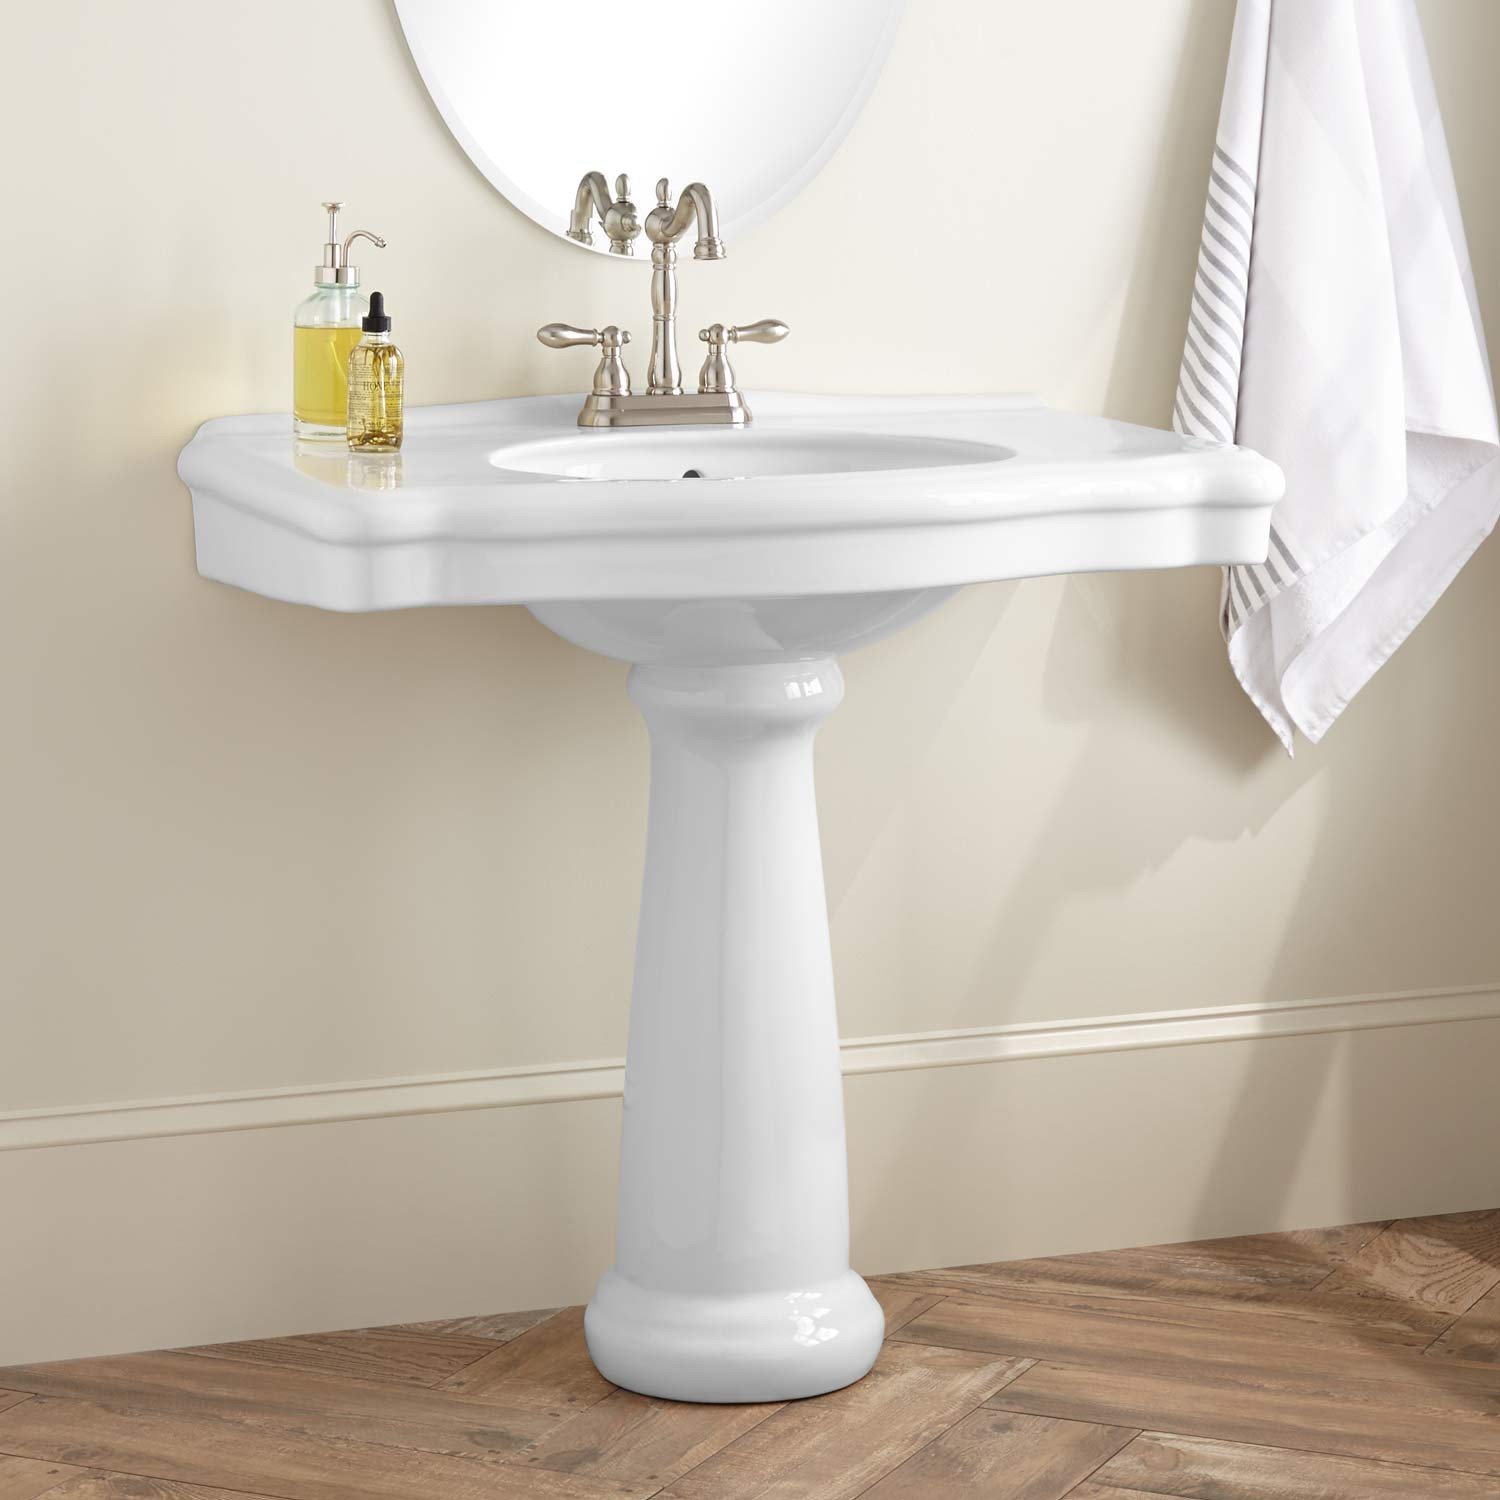 Best ideas about Pedestal Bathroom Sinks
. Save or Pin Carden Porcelain Pedestal Sink Bathroom Now.